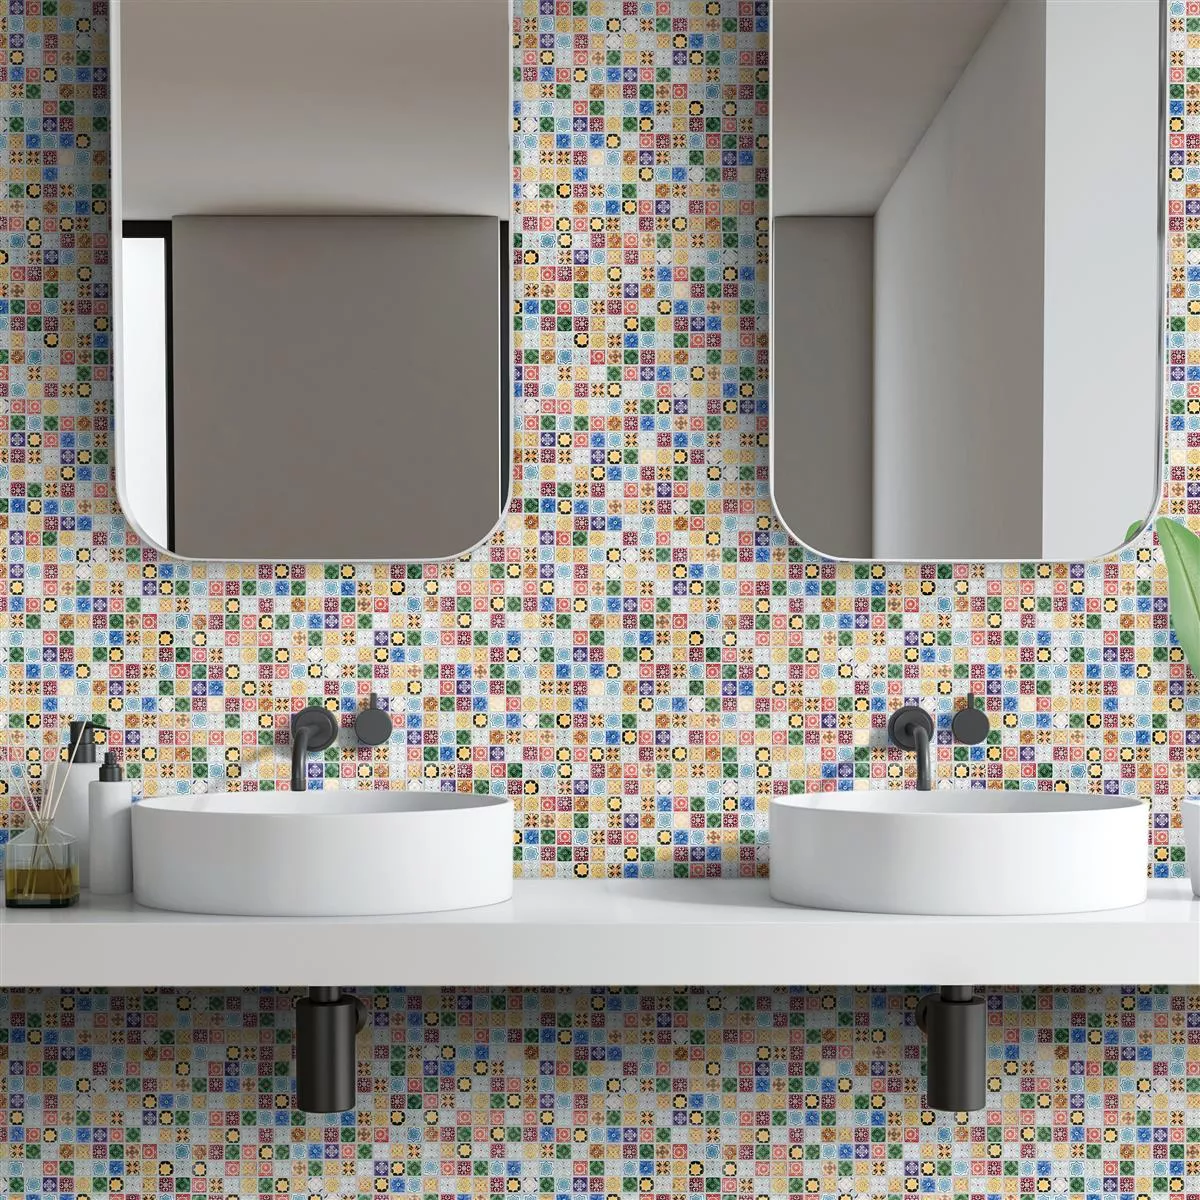 Glass Mosaic Tiles Marrakech Colored